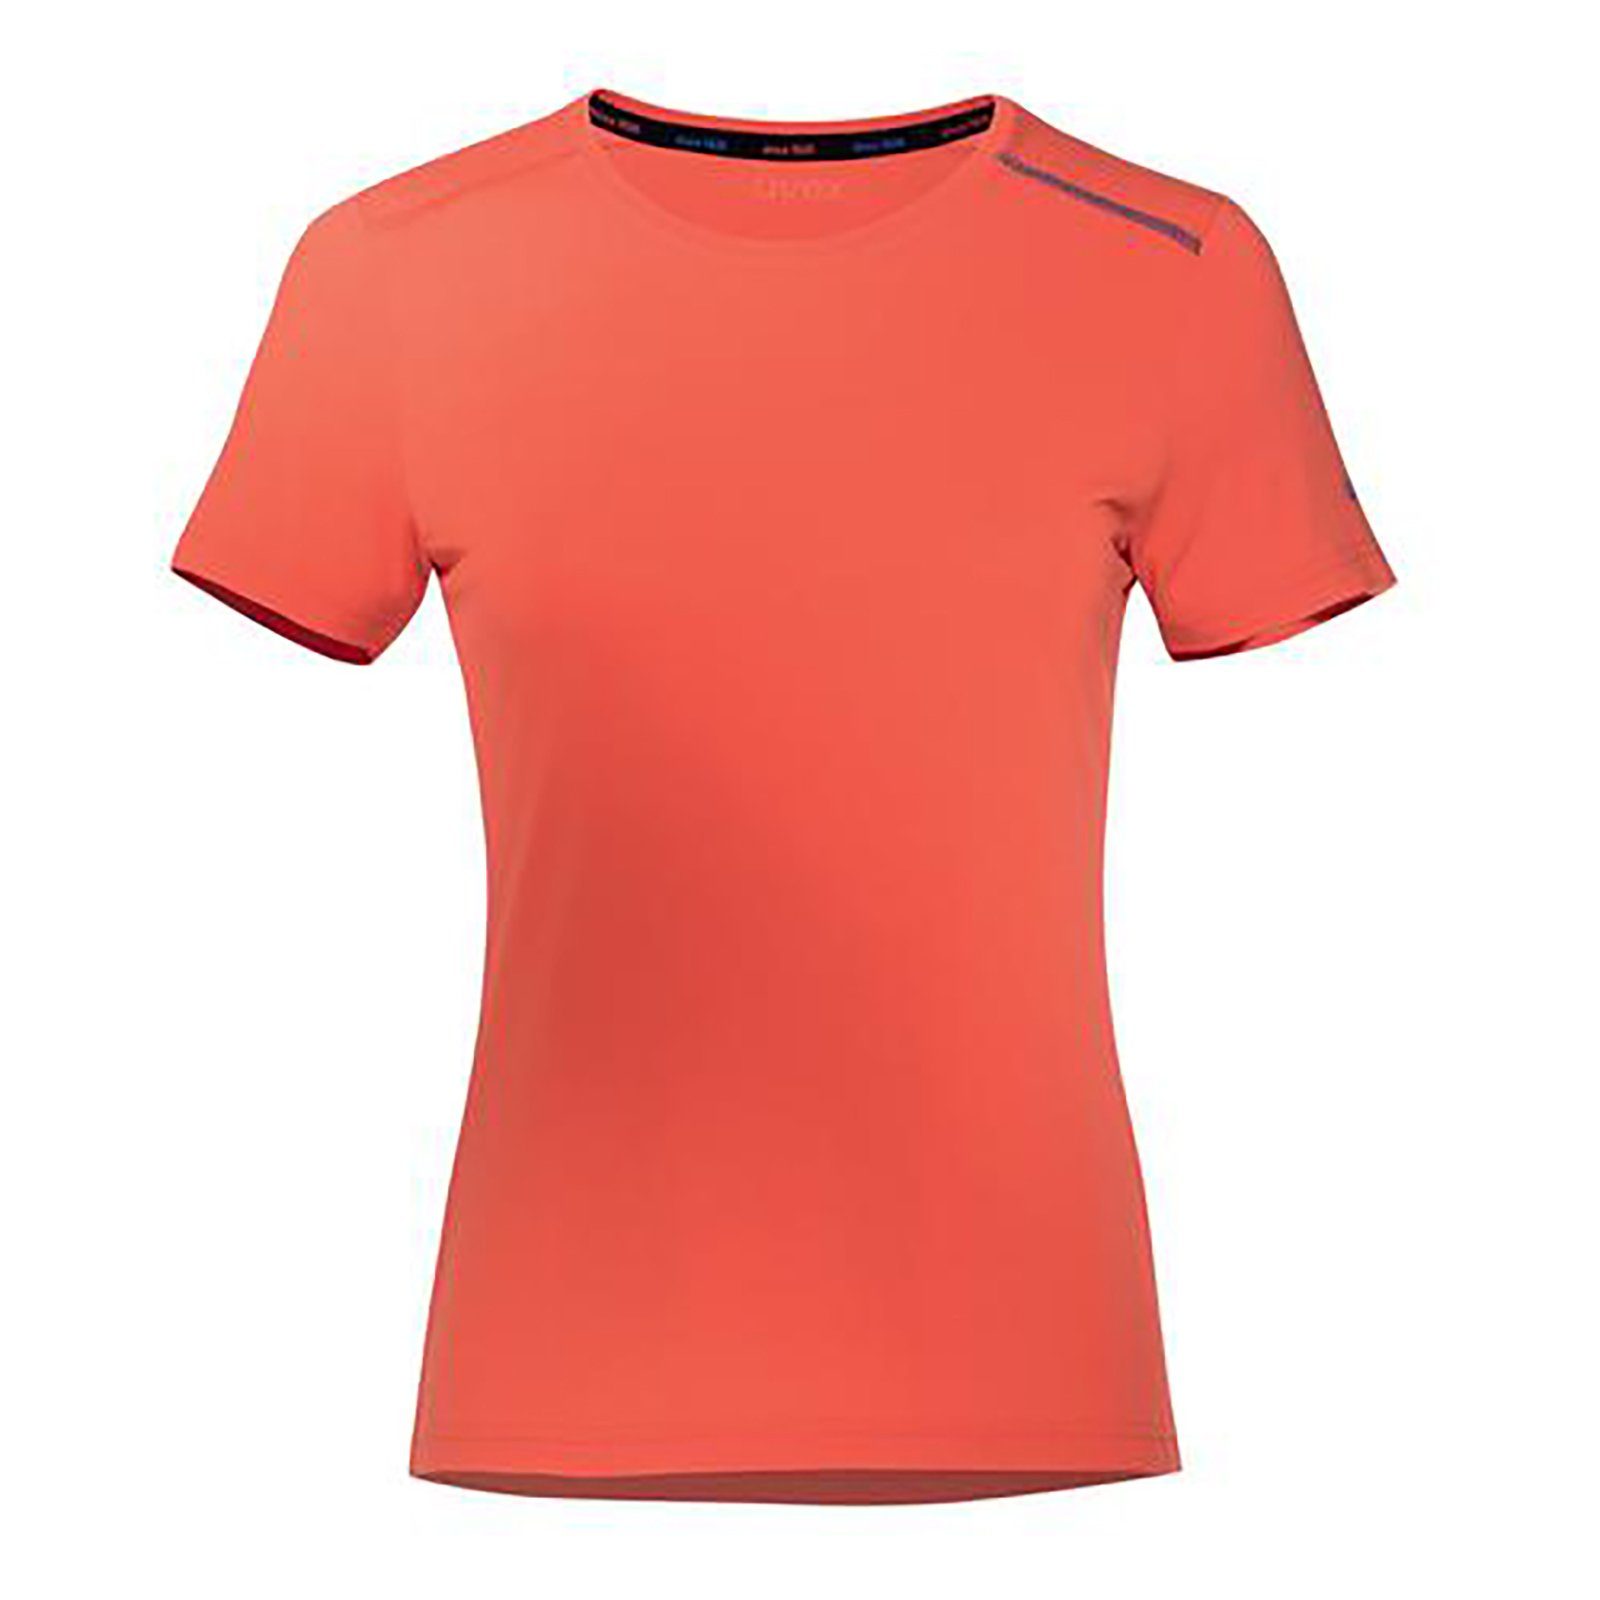 chili T-Shirt Uvex orange, suXXeed T-Shirt